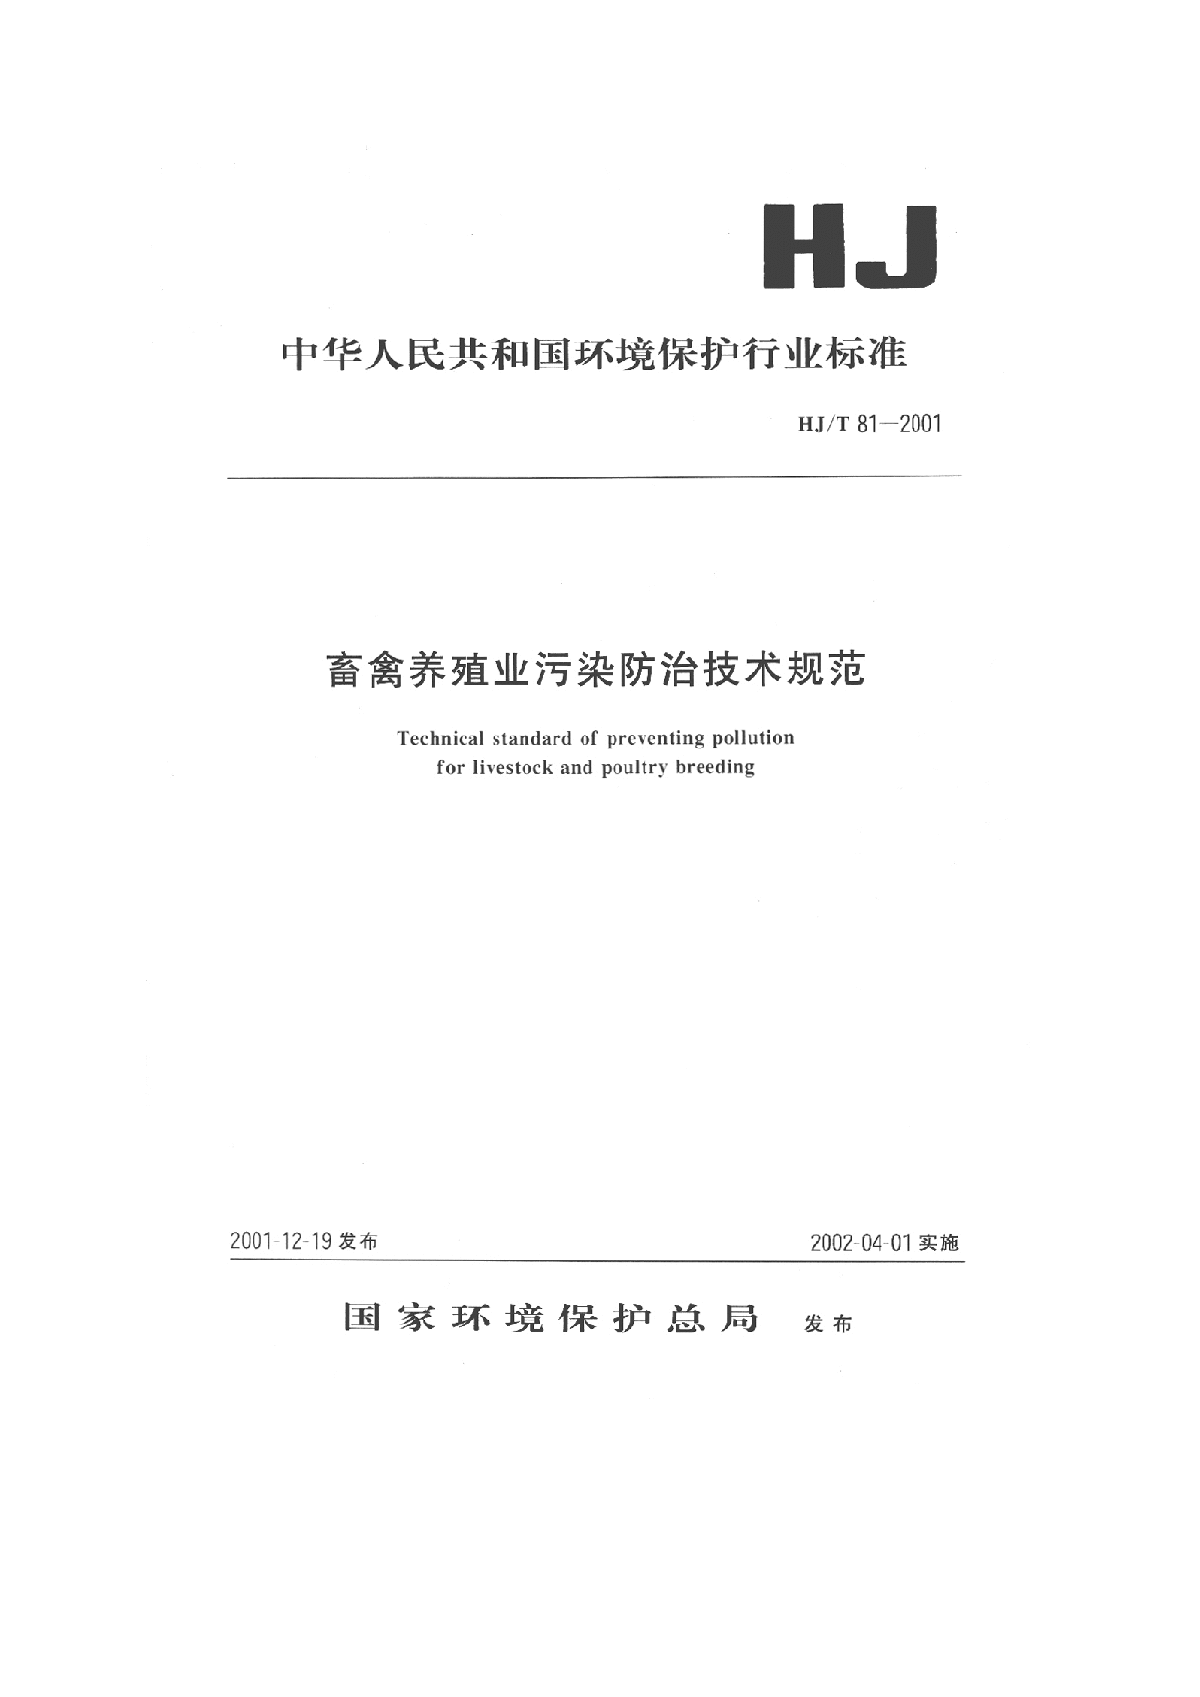 HJ_T 81-2001 畜禽养殖业污染防治技术规范